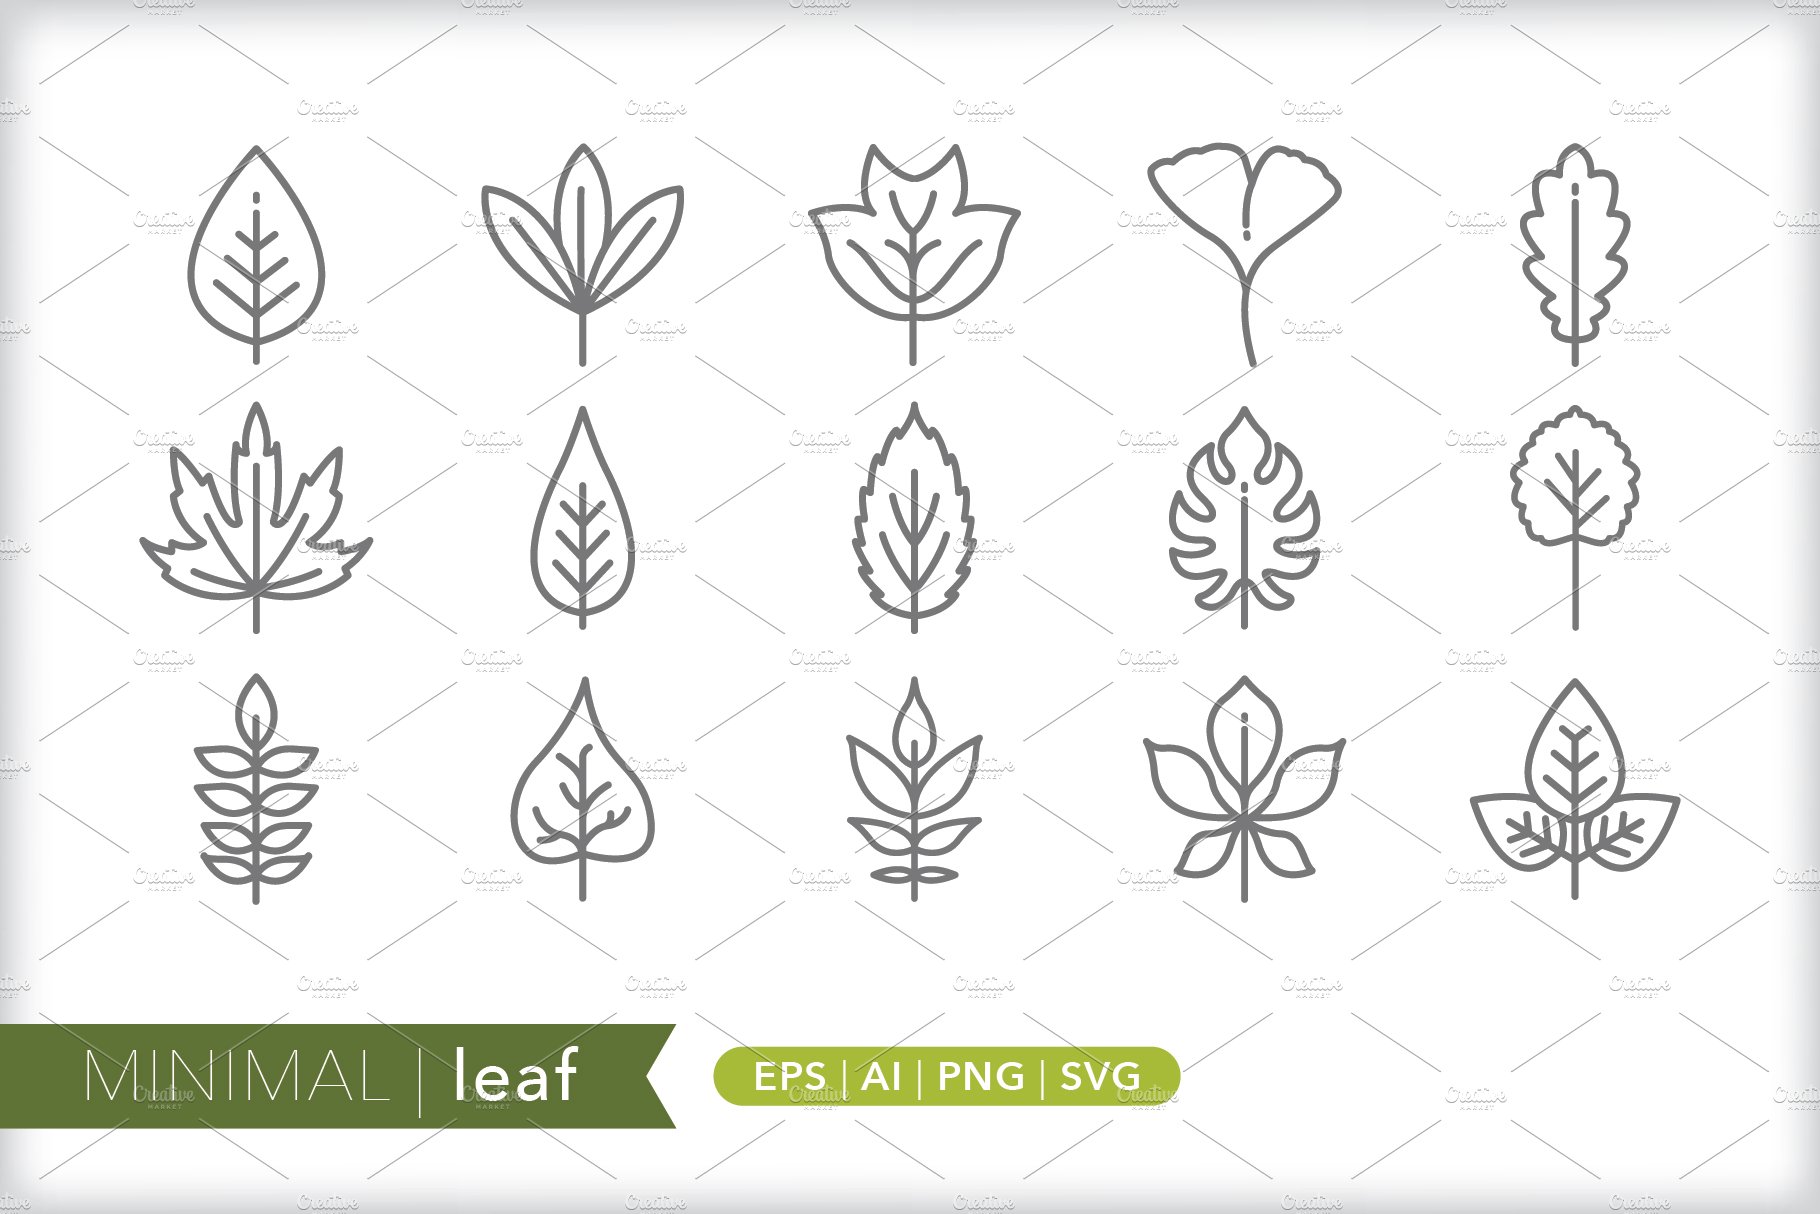 Minimal leaf icons cover image.